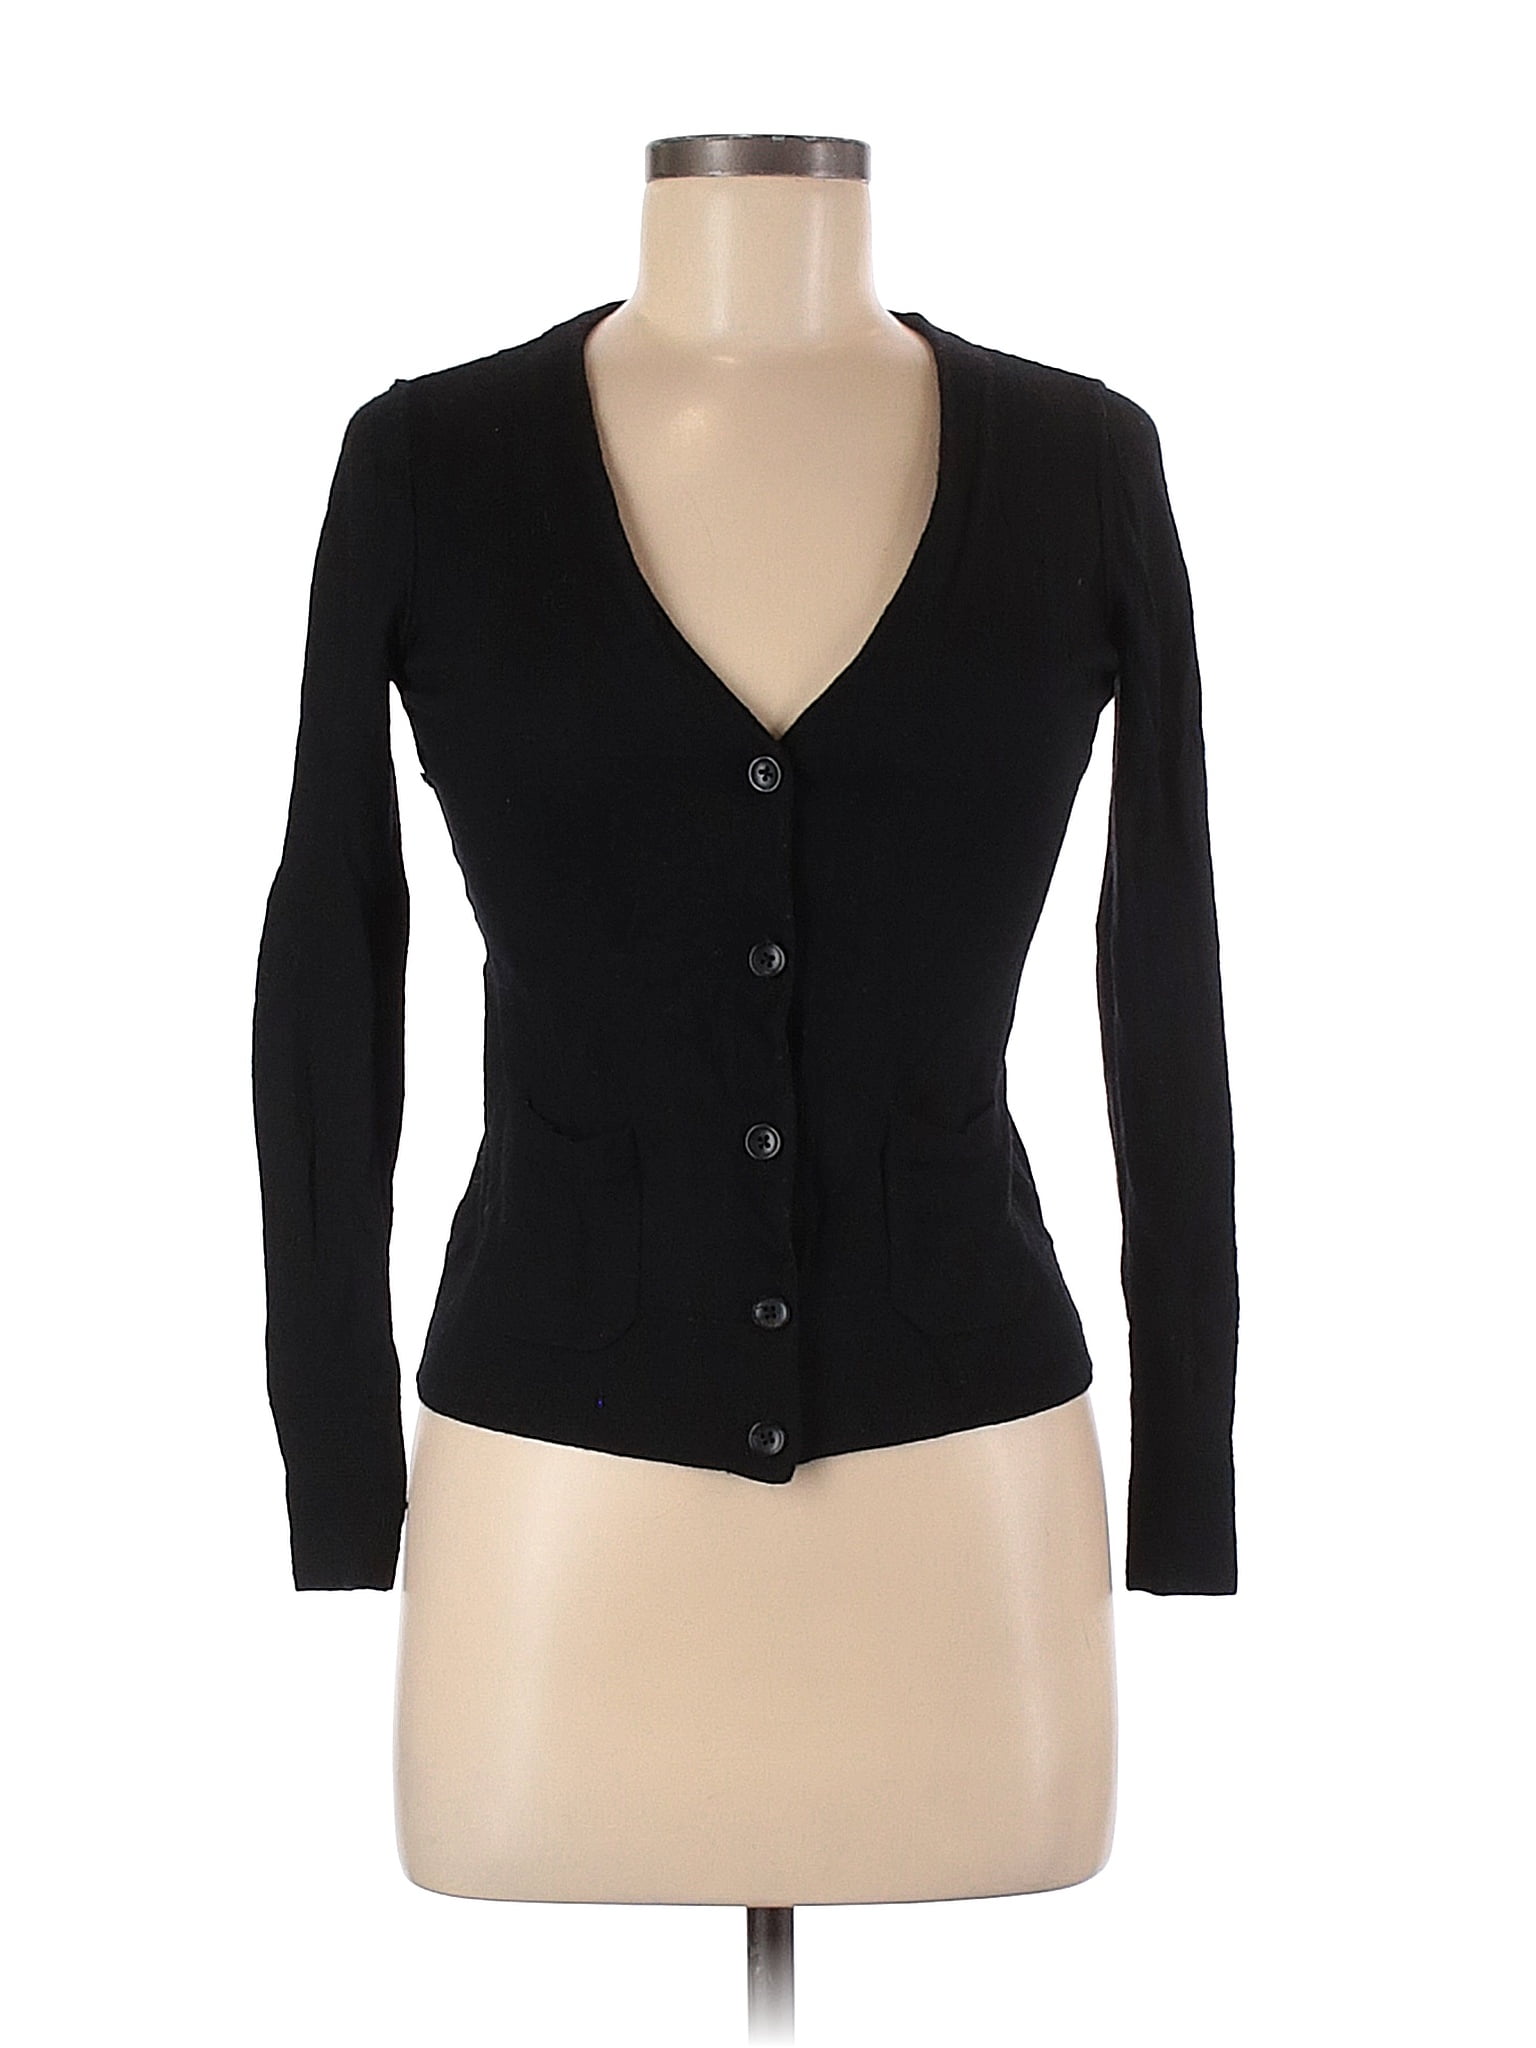 Halogen 100% Merino Wool Black Cardigan Size M - 76% off | thredUP